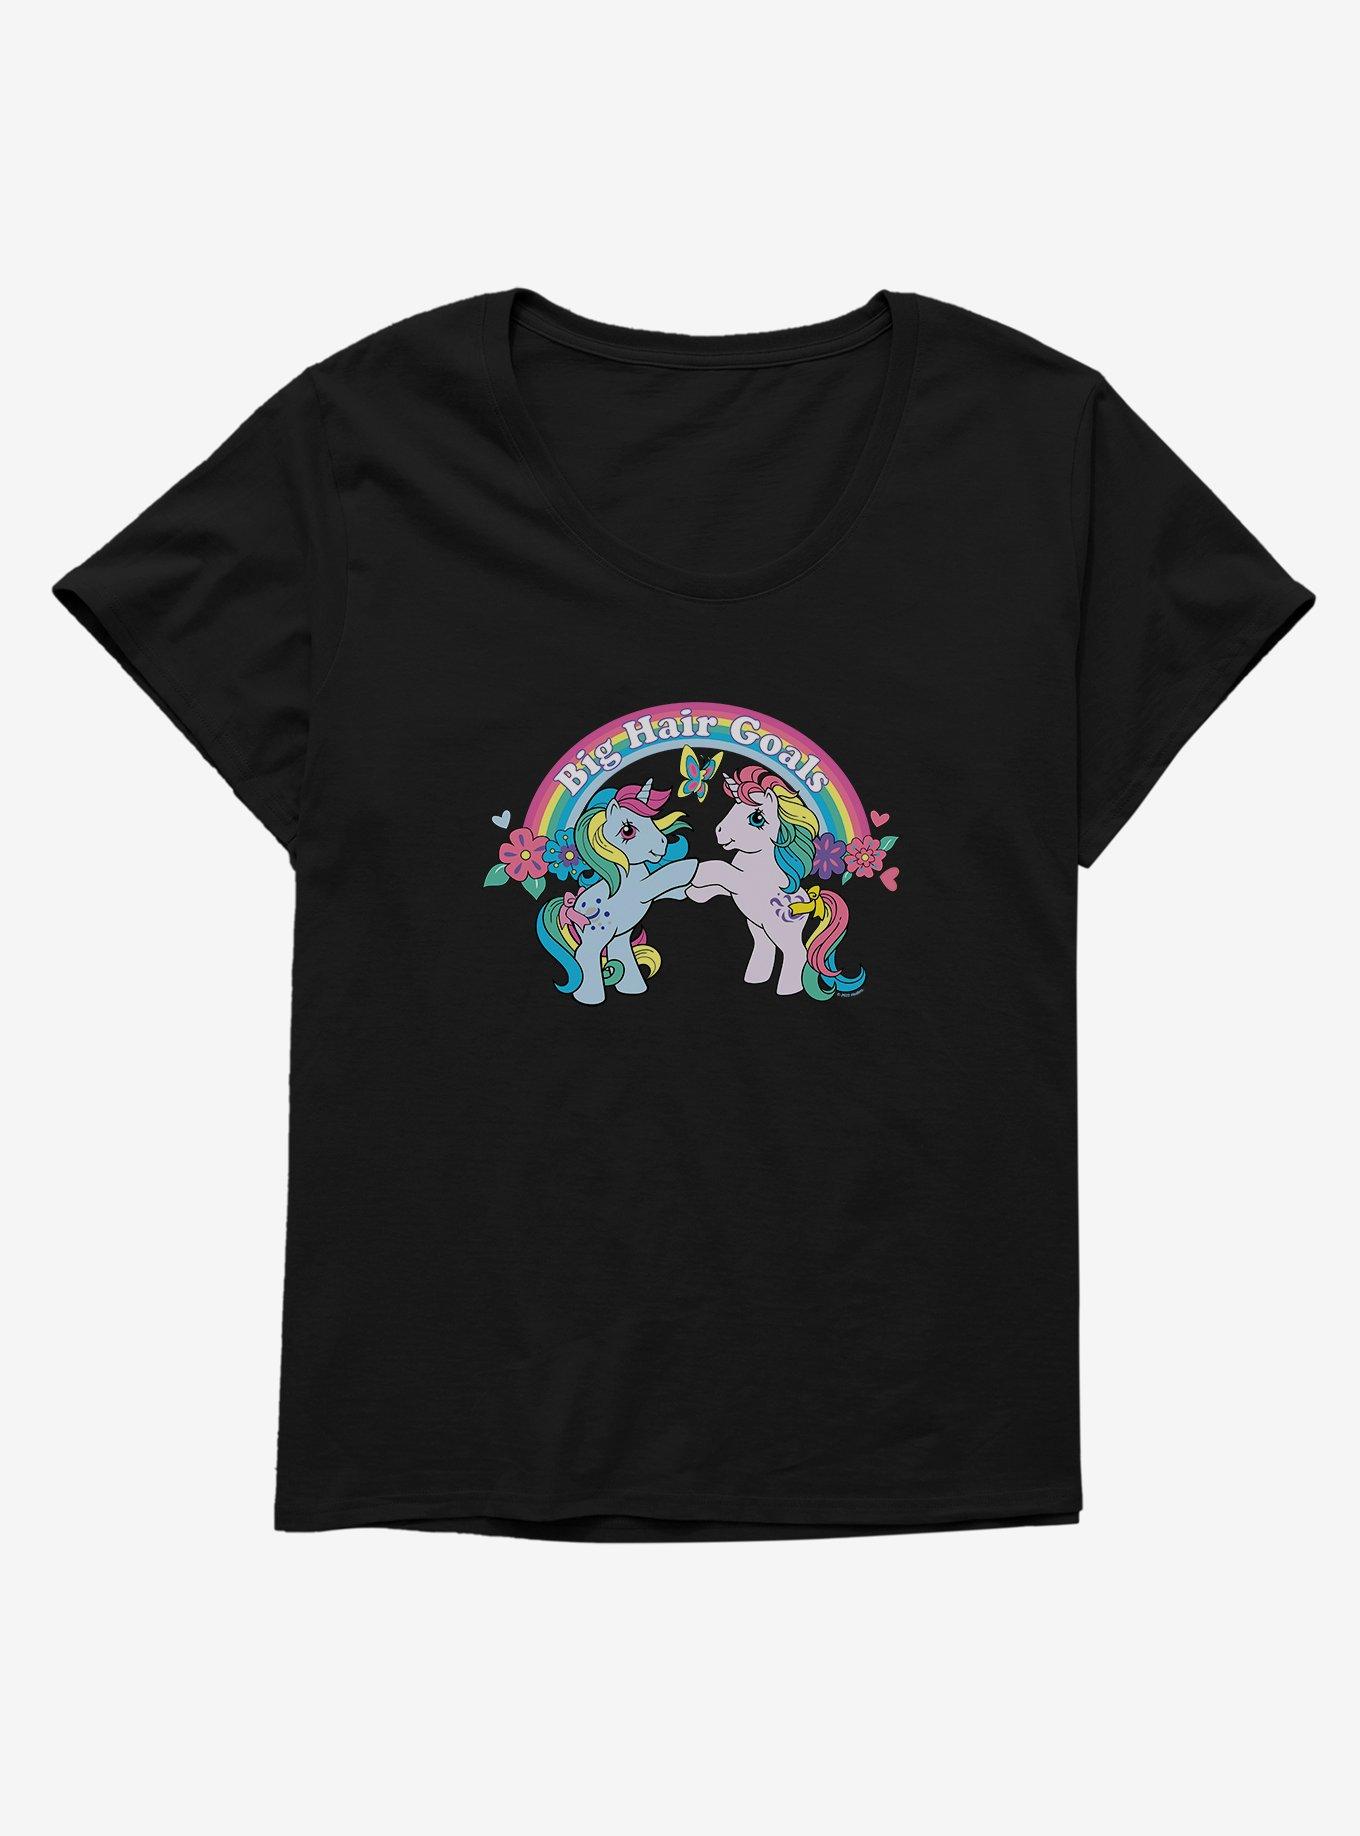 My Little Pony Big Hair Goals Retro Womens T-Shirt Plus